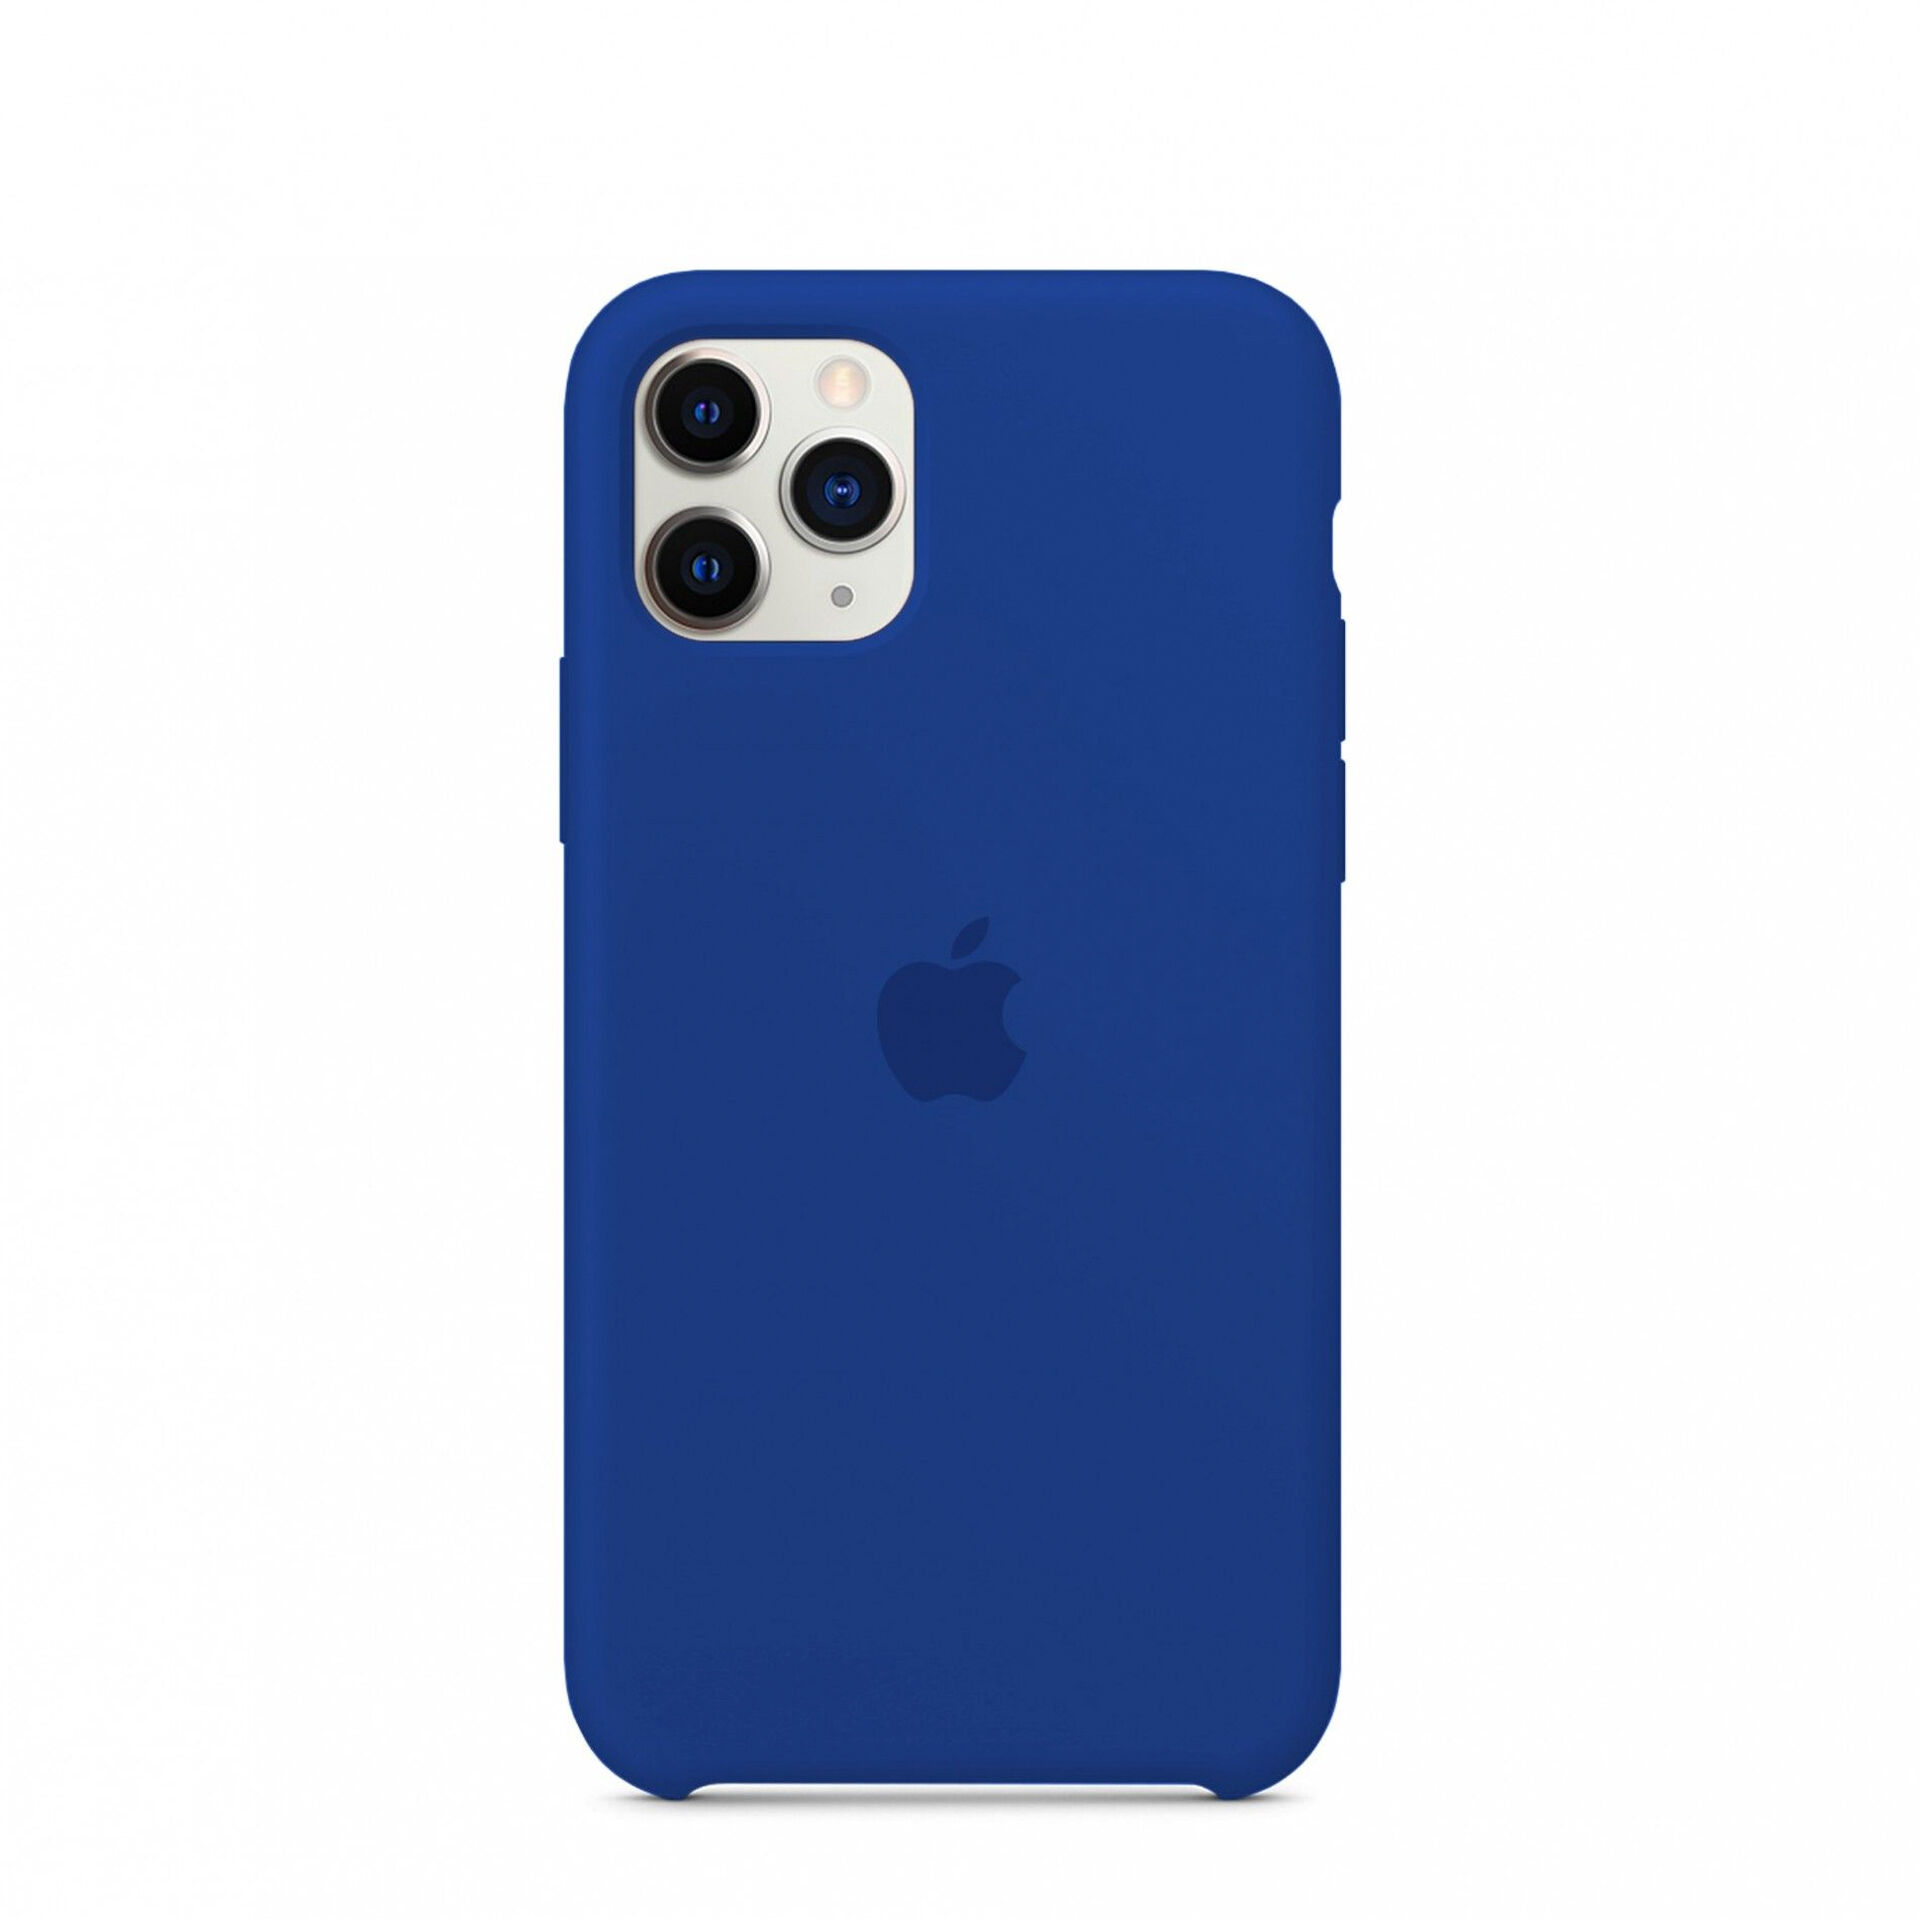 Apple Capa silicone Azul iPhone 11 Pro